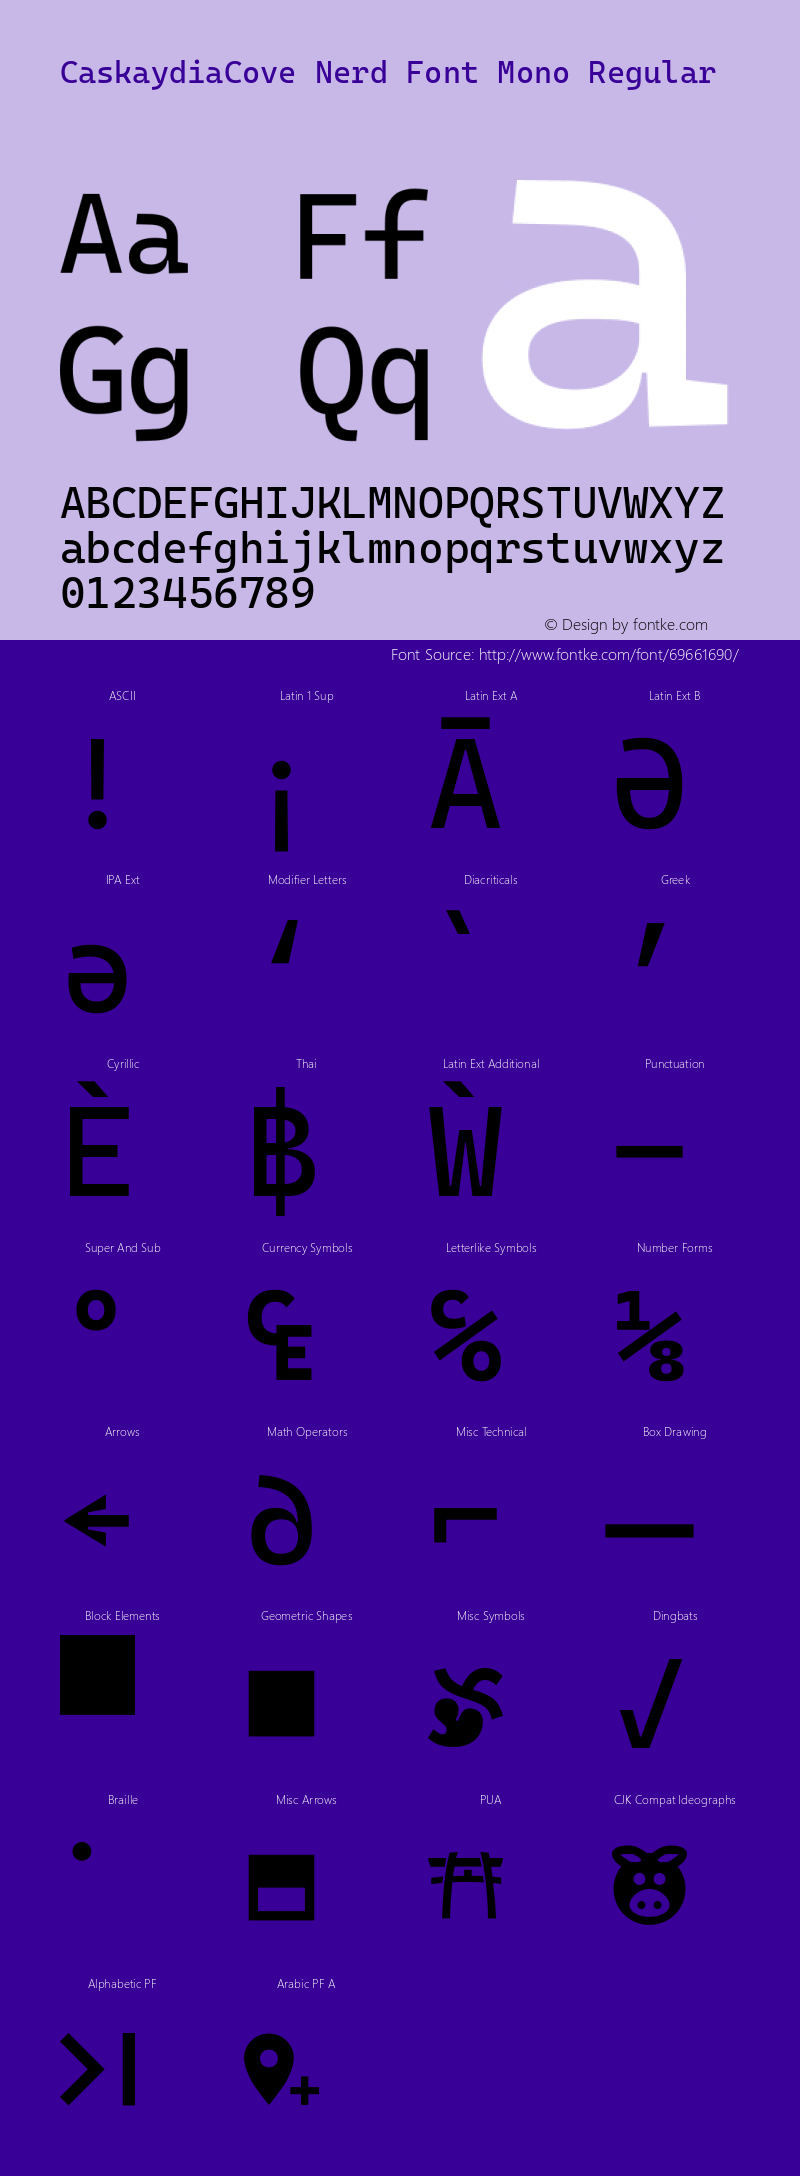 Caskaydia Cove Regular Nerd Font Complete Mono Version 1911.210 Font Sample